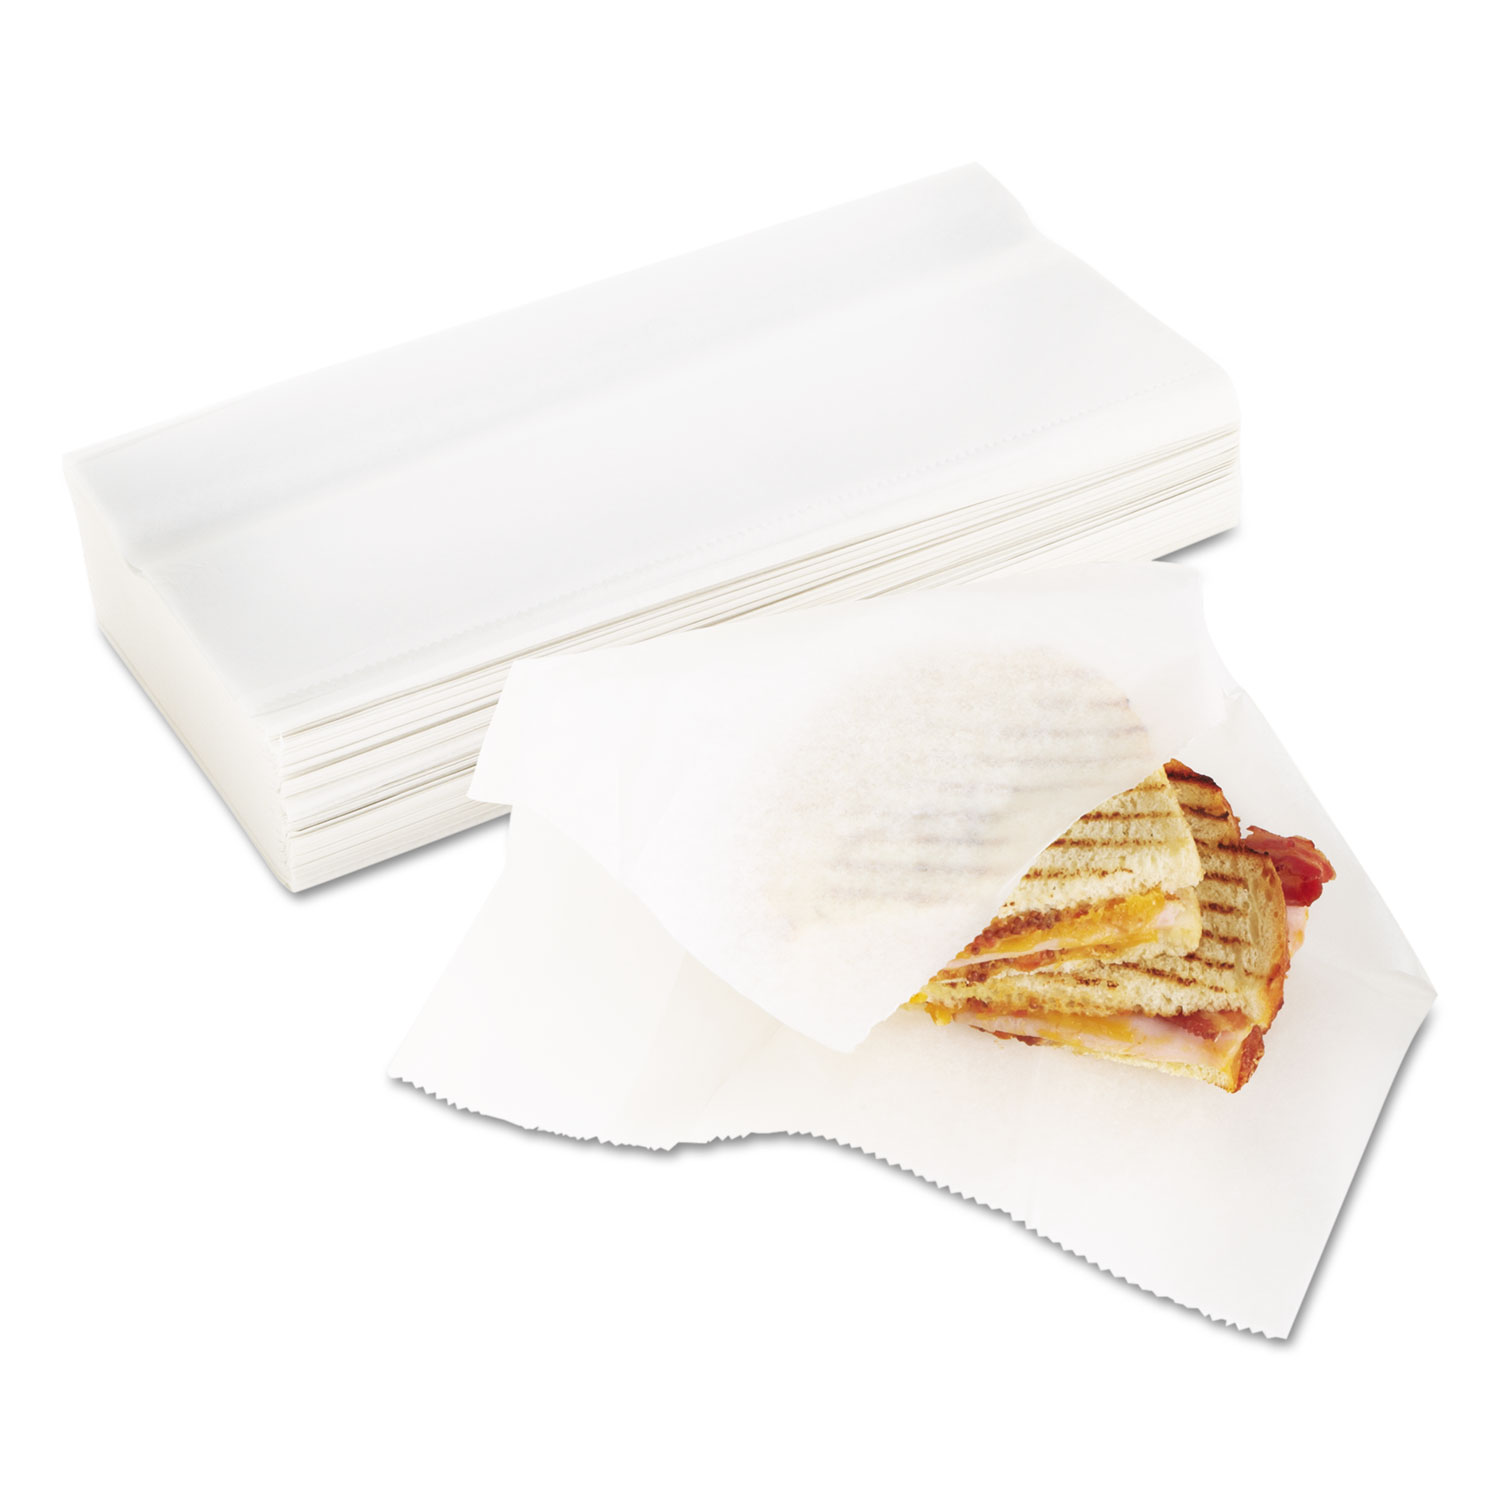 Interfold-Sheet Deli Paper, 12 x 10 3/4, White, 500 Sheets/Box, 12 Box/Carton